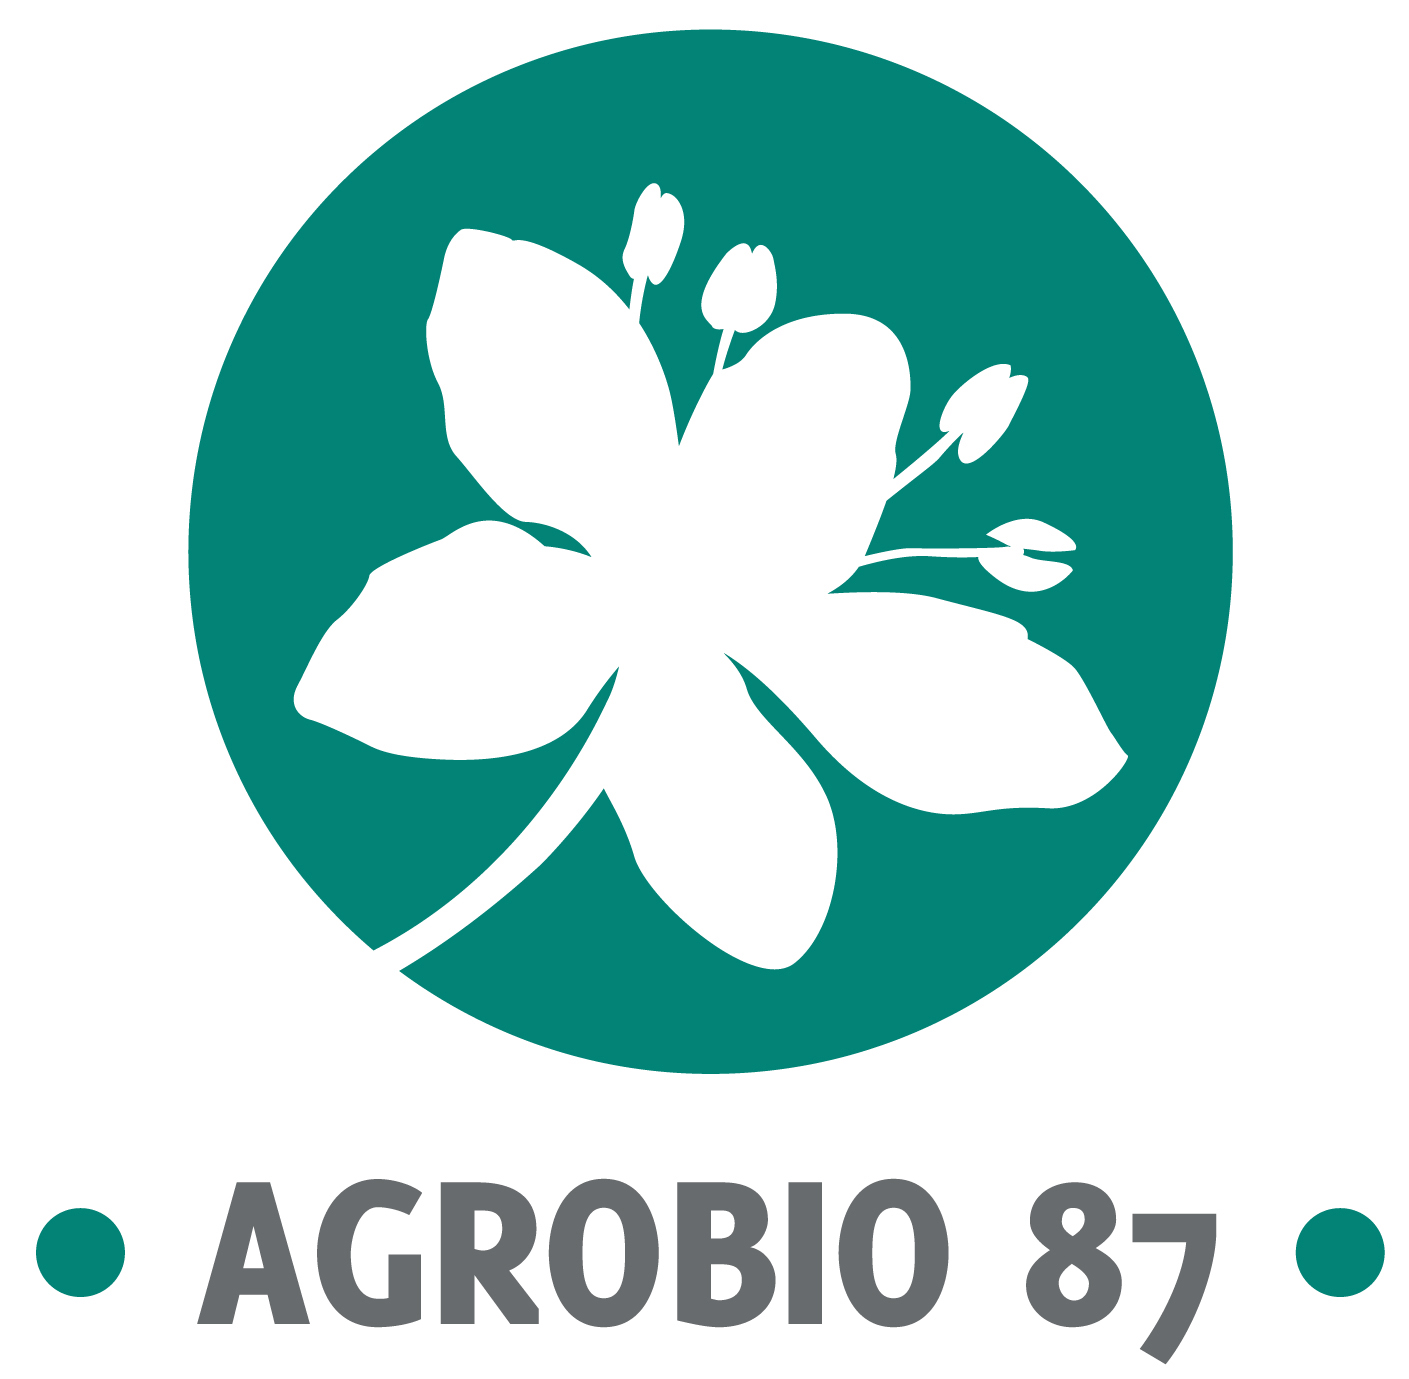 AGROBIO 87